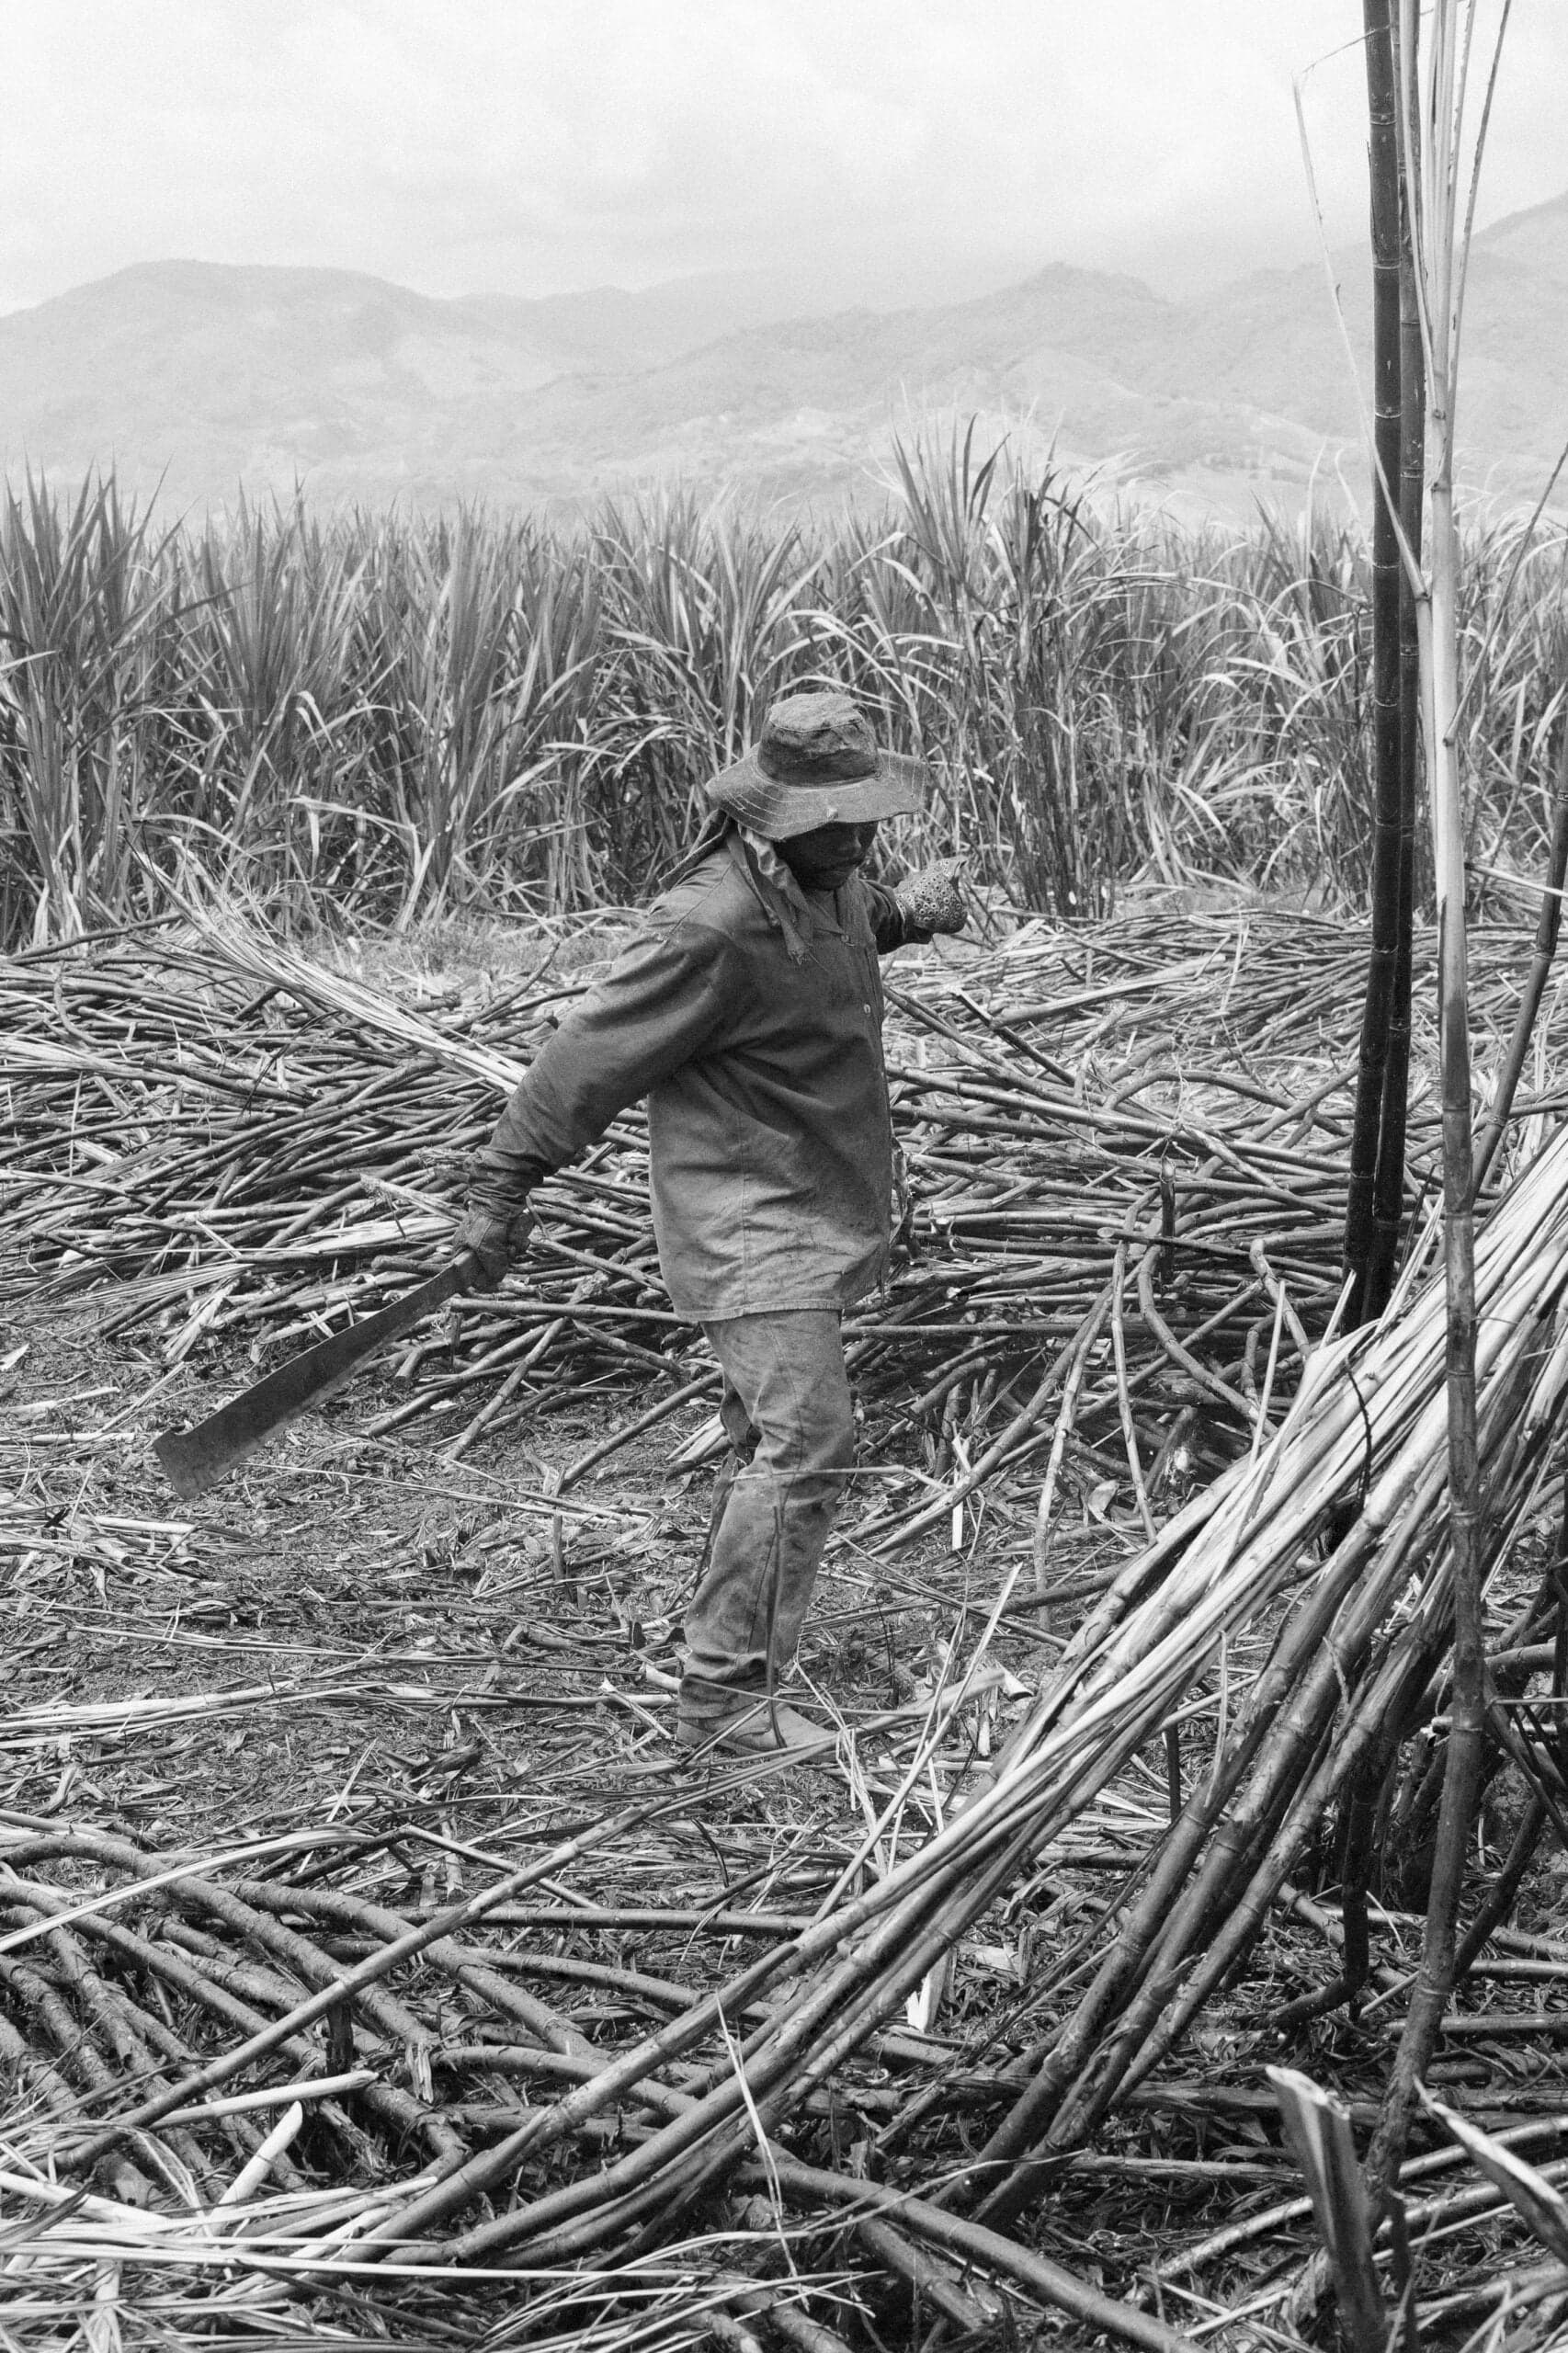 A sugar cane cutter on a farm in Colombia's Valle de Cauca